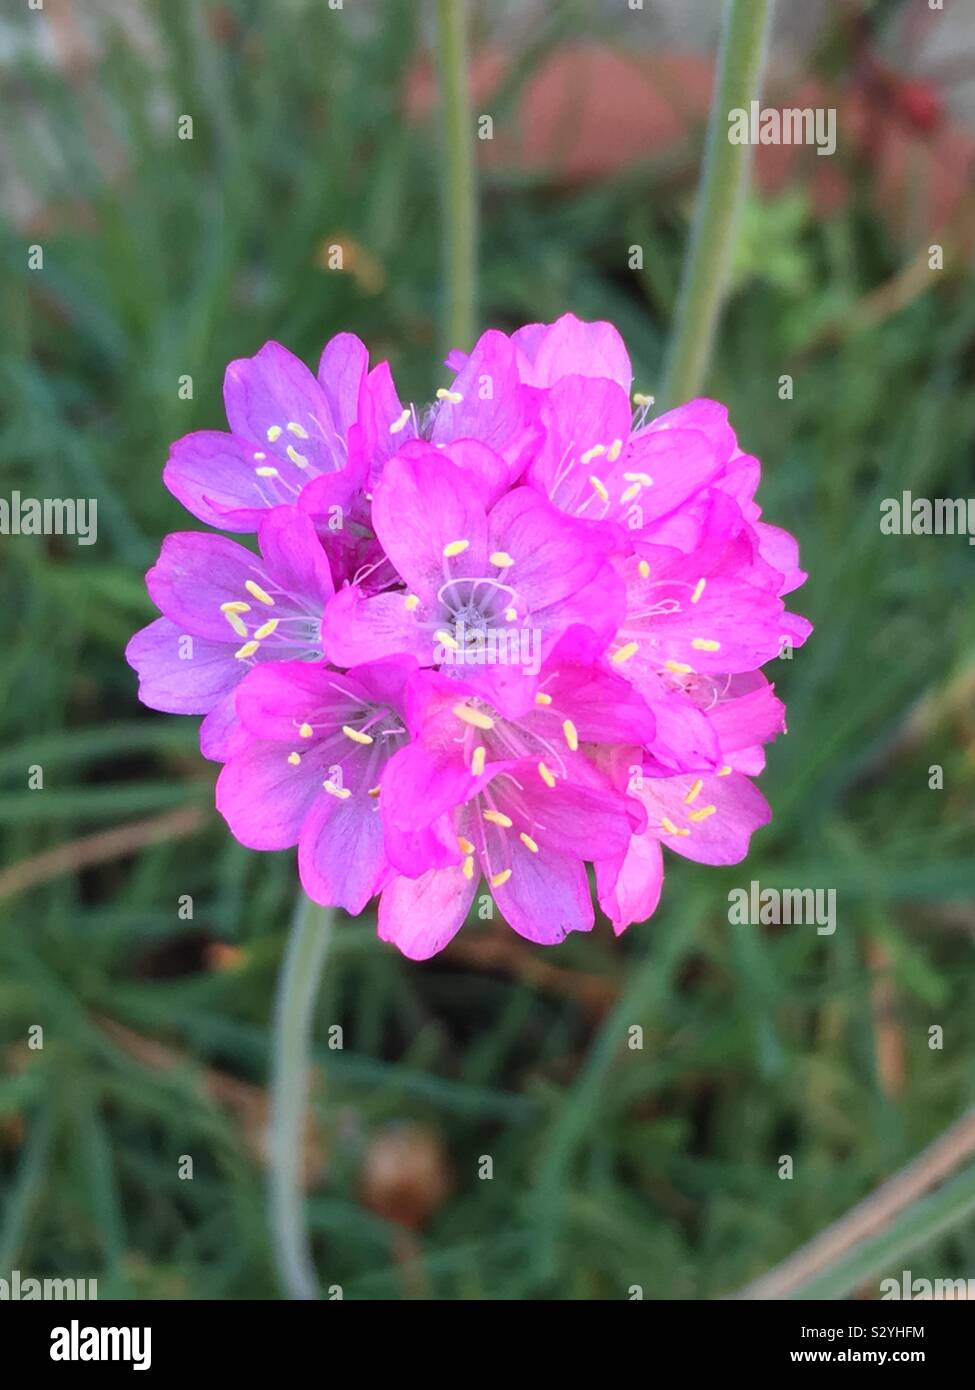 Alium flowers Stock Photo